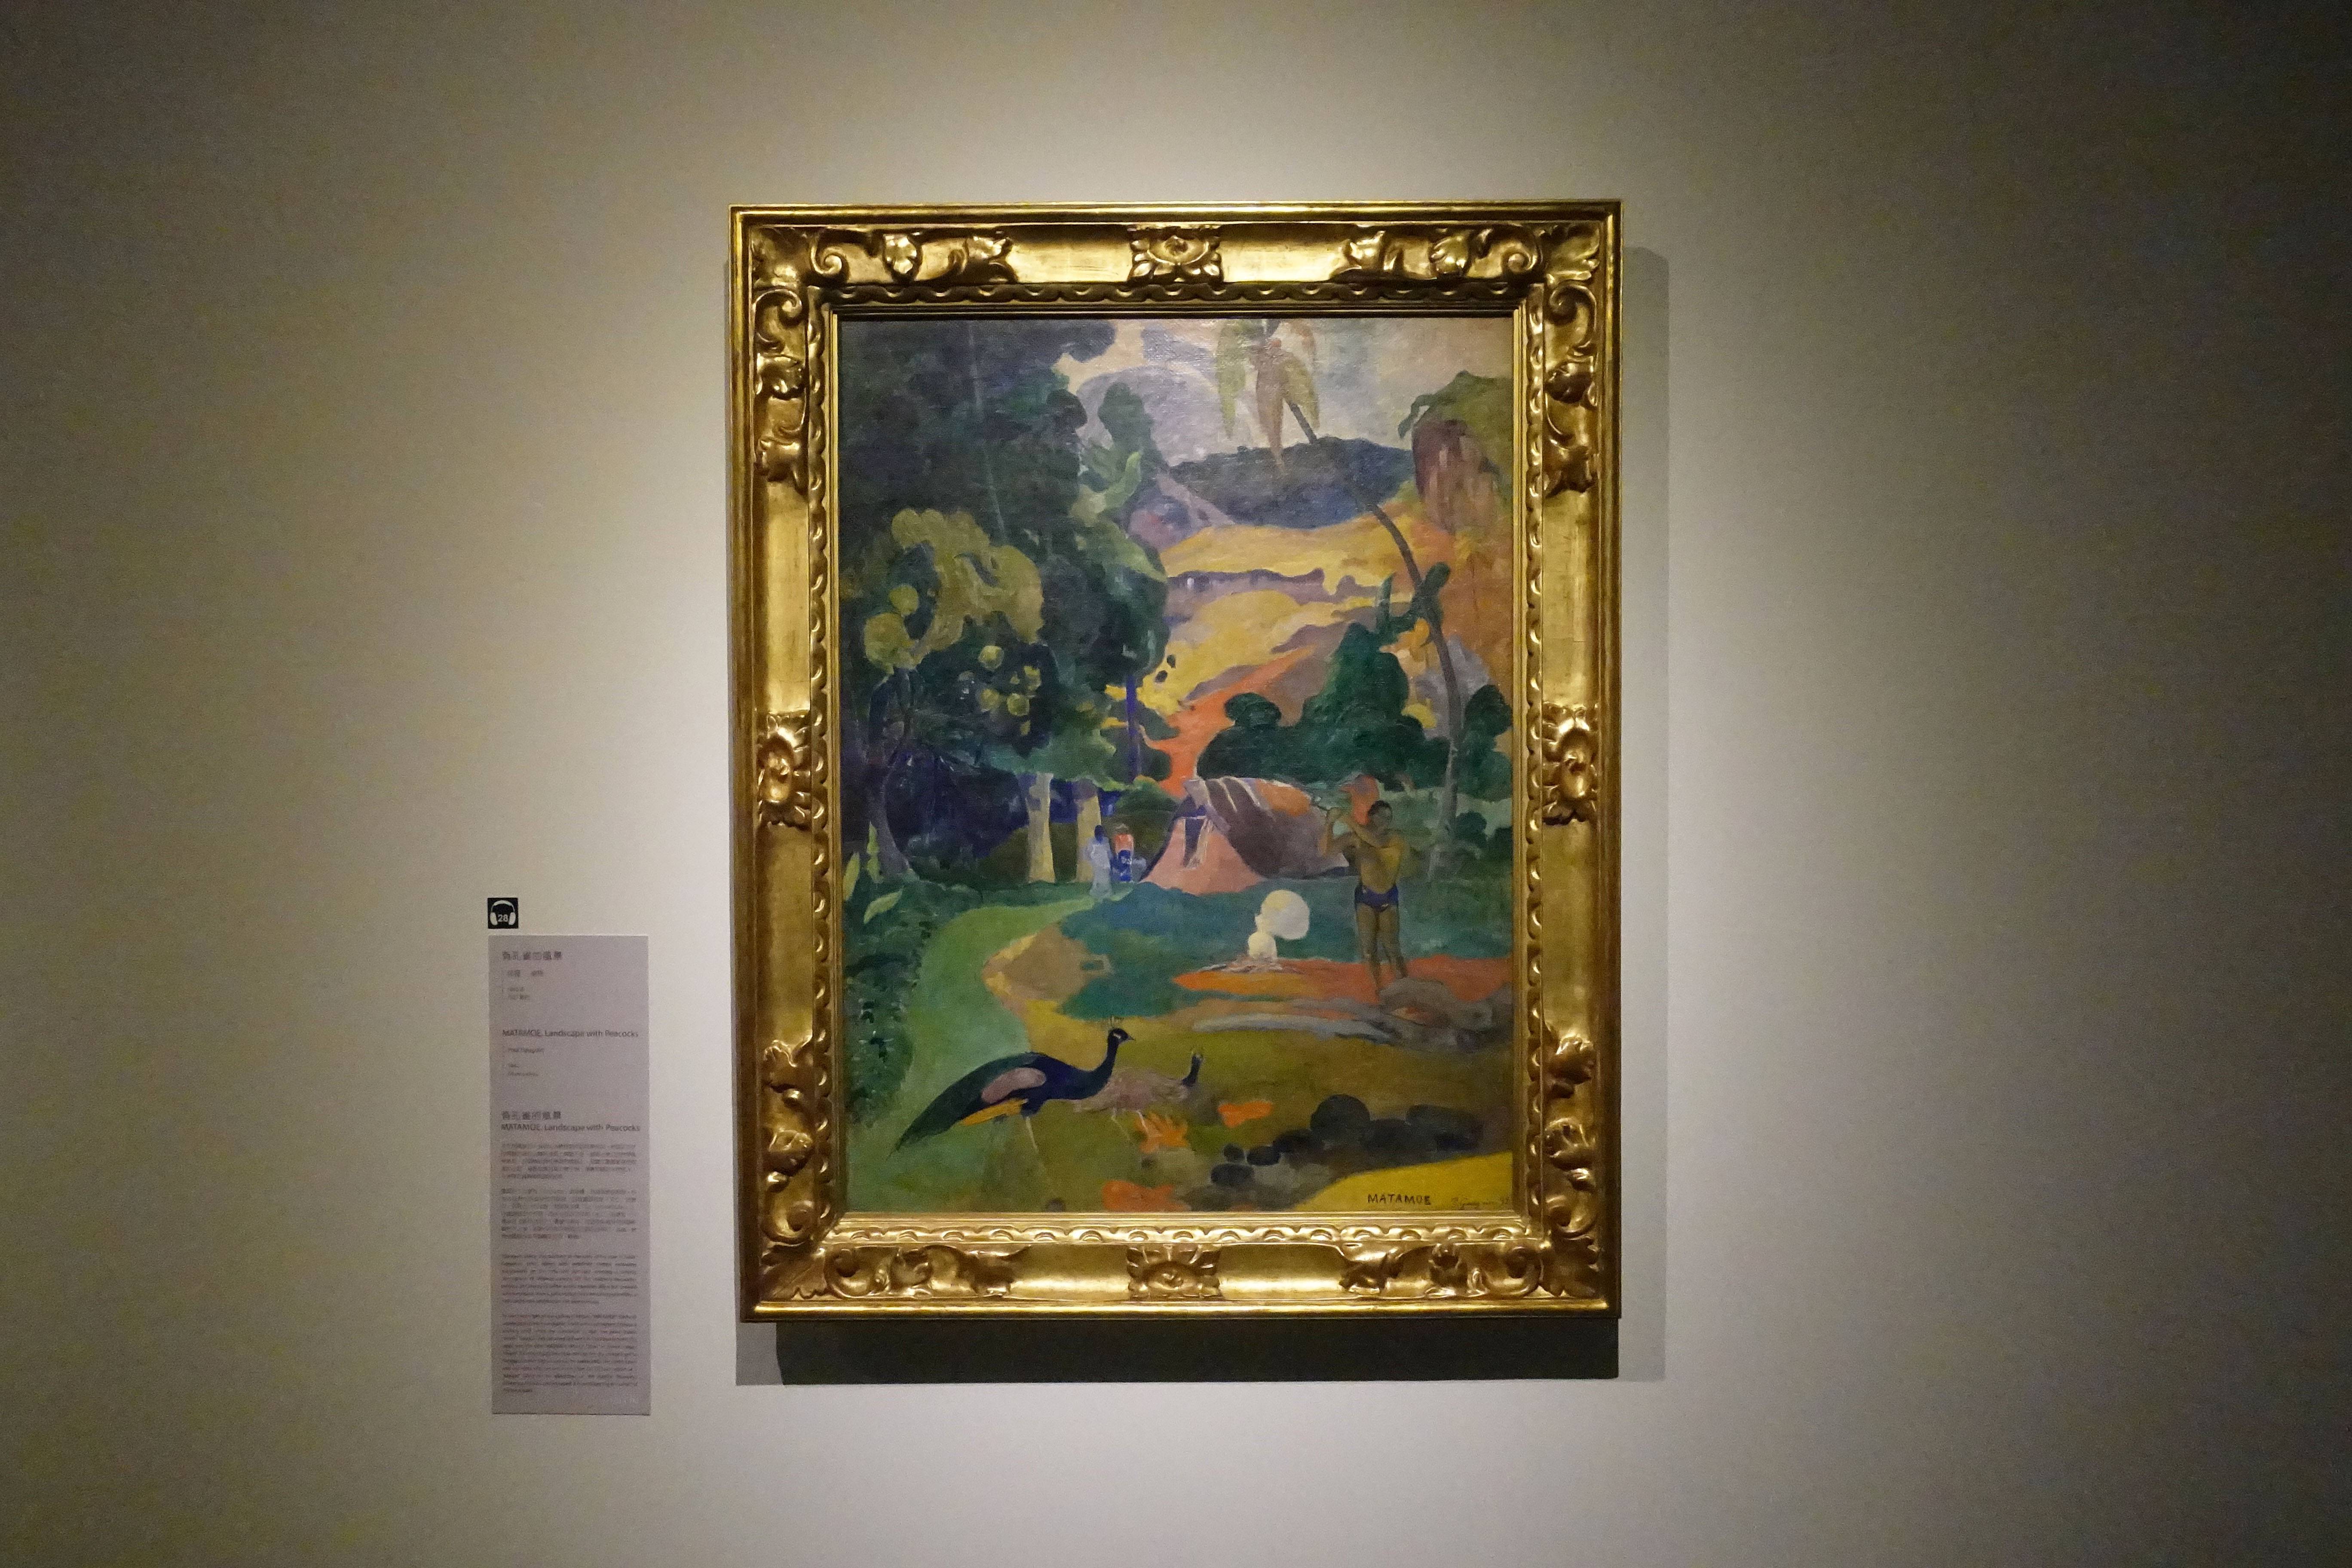 保羅．高更 Paul Gauguin ，《有孔雀的風景 MATAMOE, Landscape with Peacocks》，油彩、畫布 Oil on canvas。